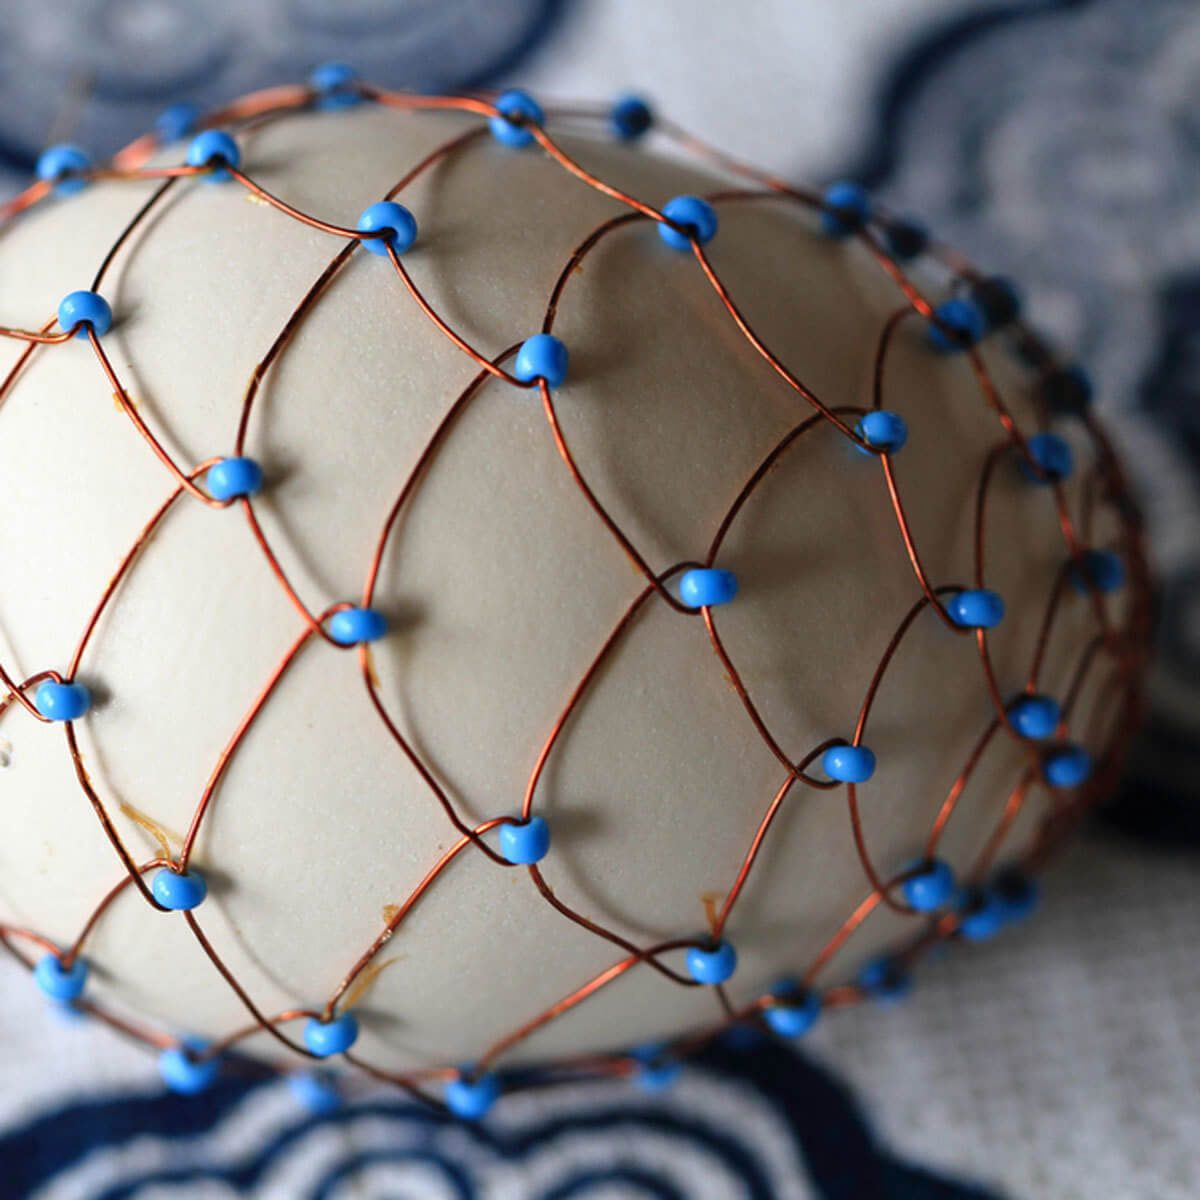 4mm Copper Craft Wire Jewelry, Copper Wire Craft Ideas